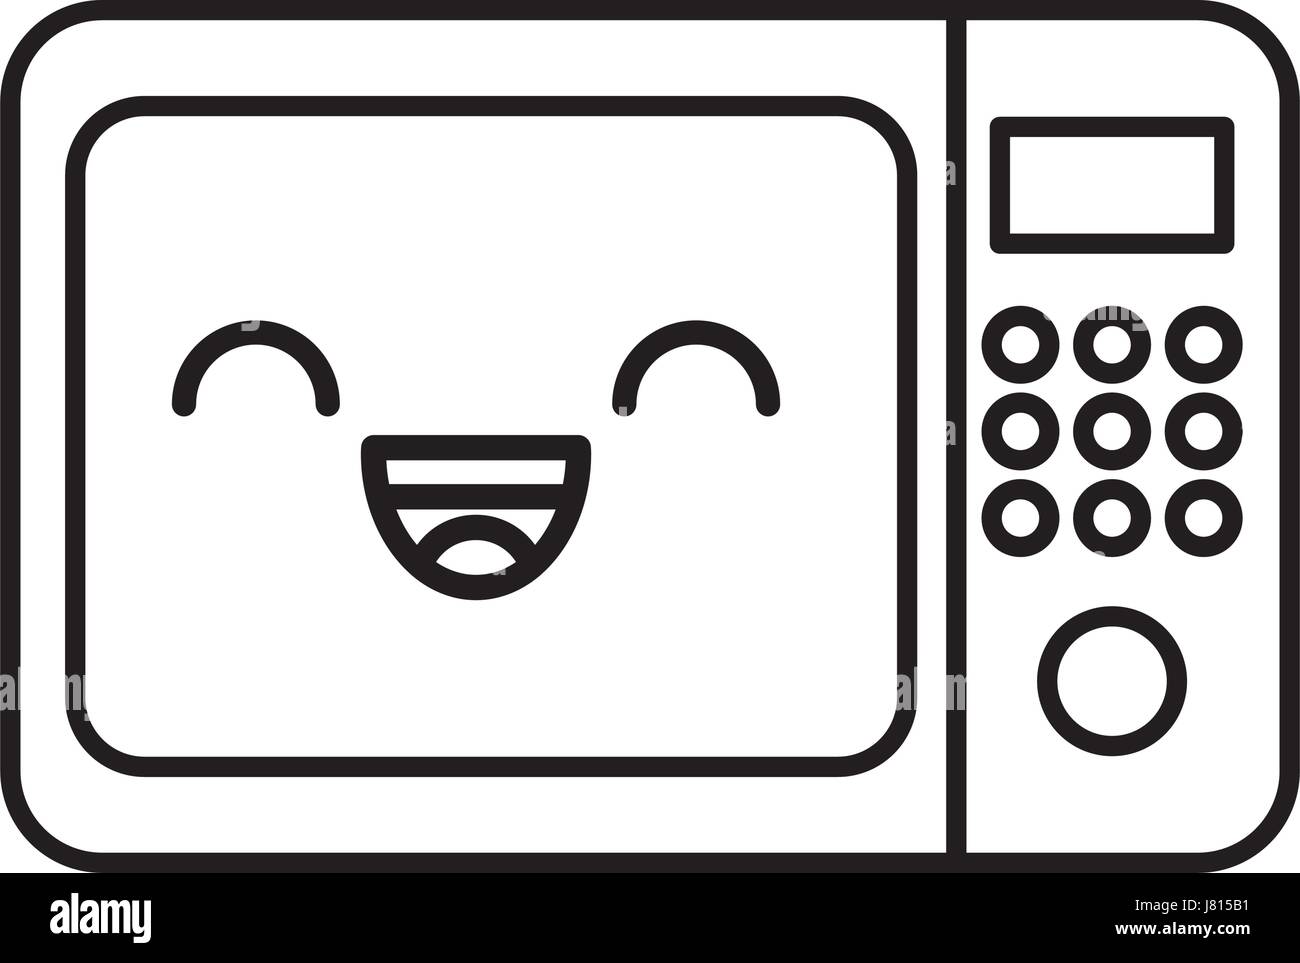 Microwave kitchen appliance cute kawaii cartoon Vector Image